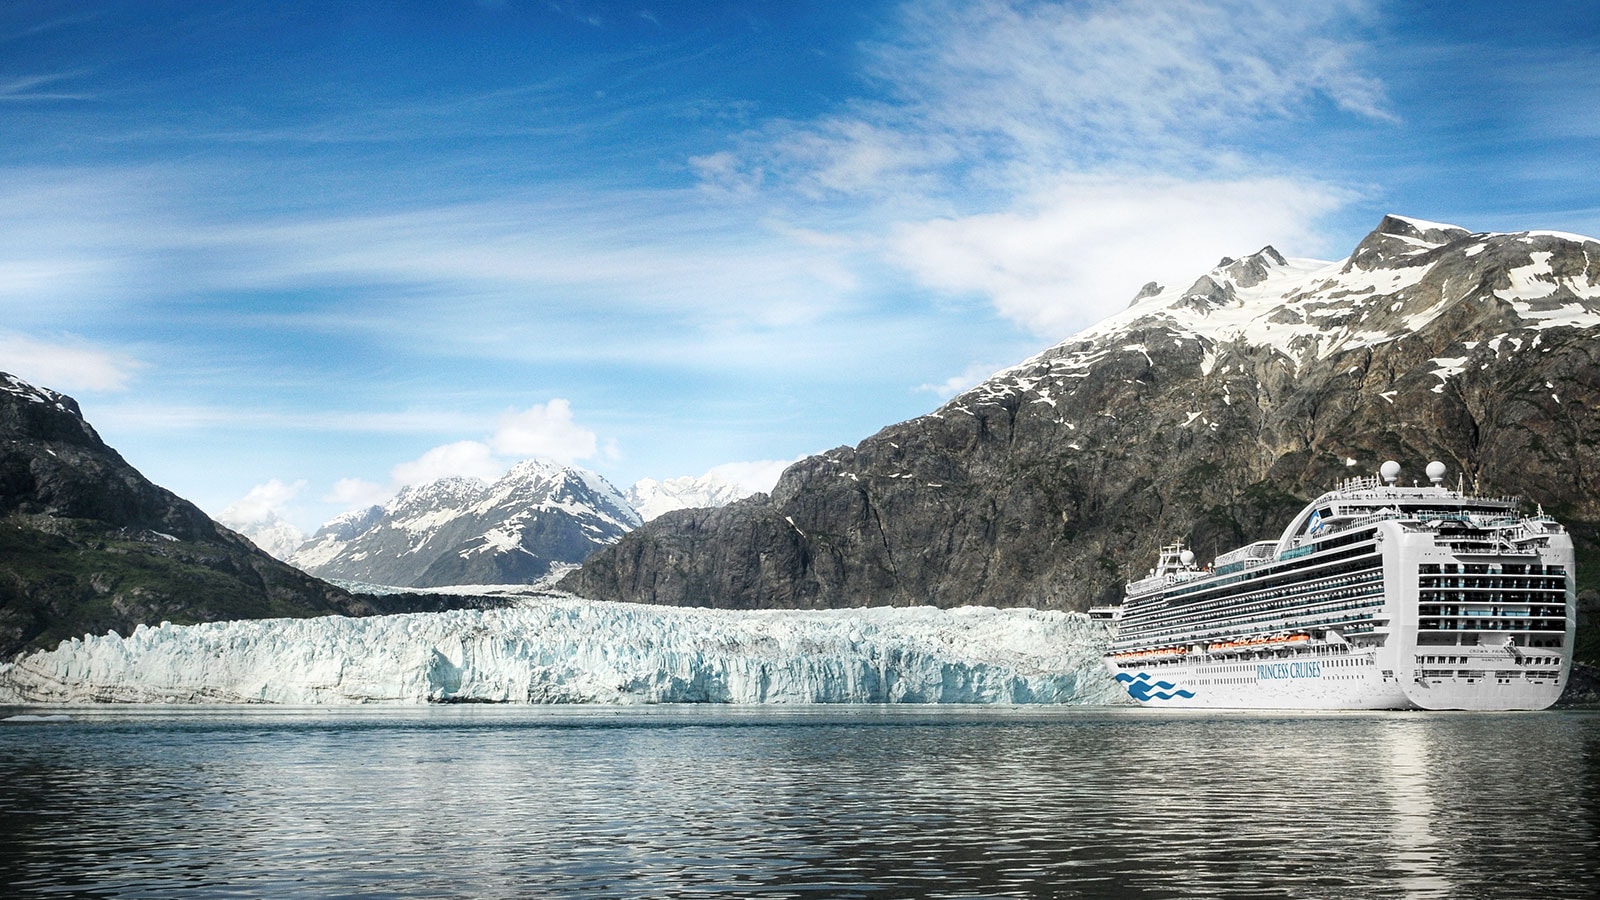 Princess cruise ship on a voyage of the glaciers Alaska cruise